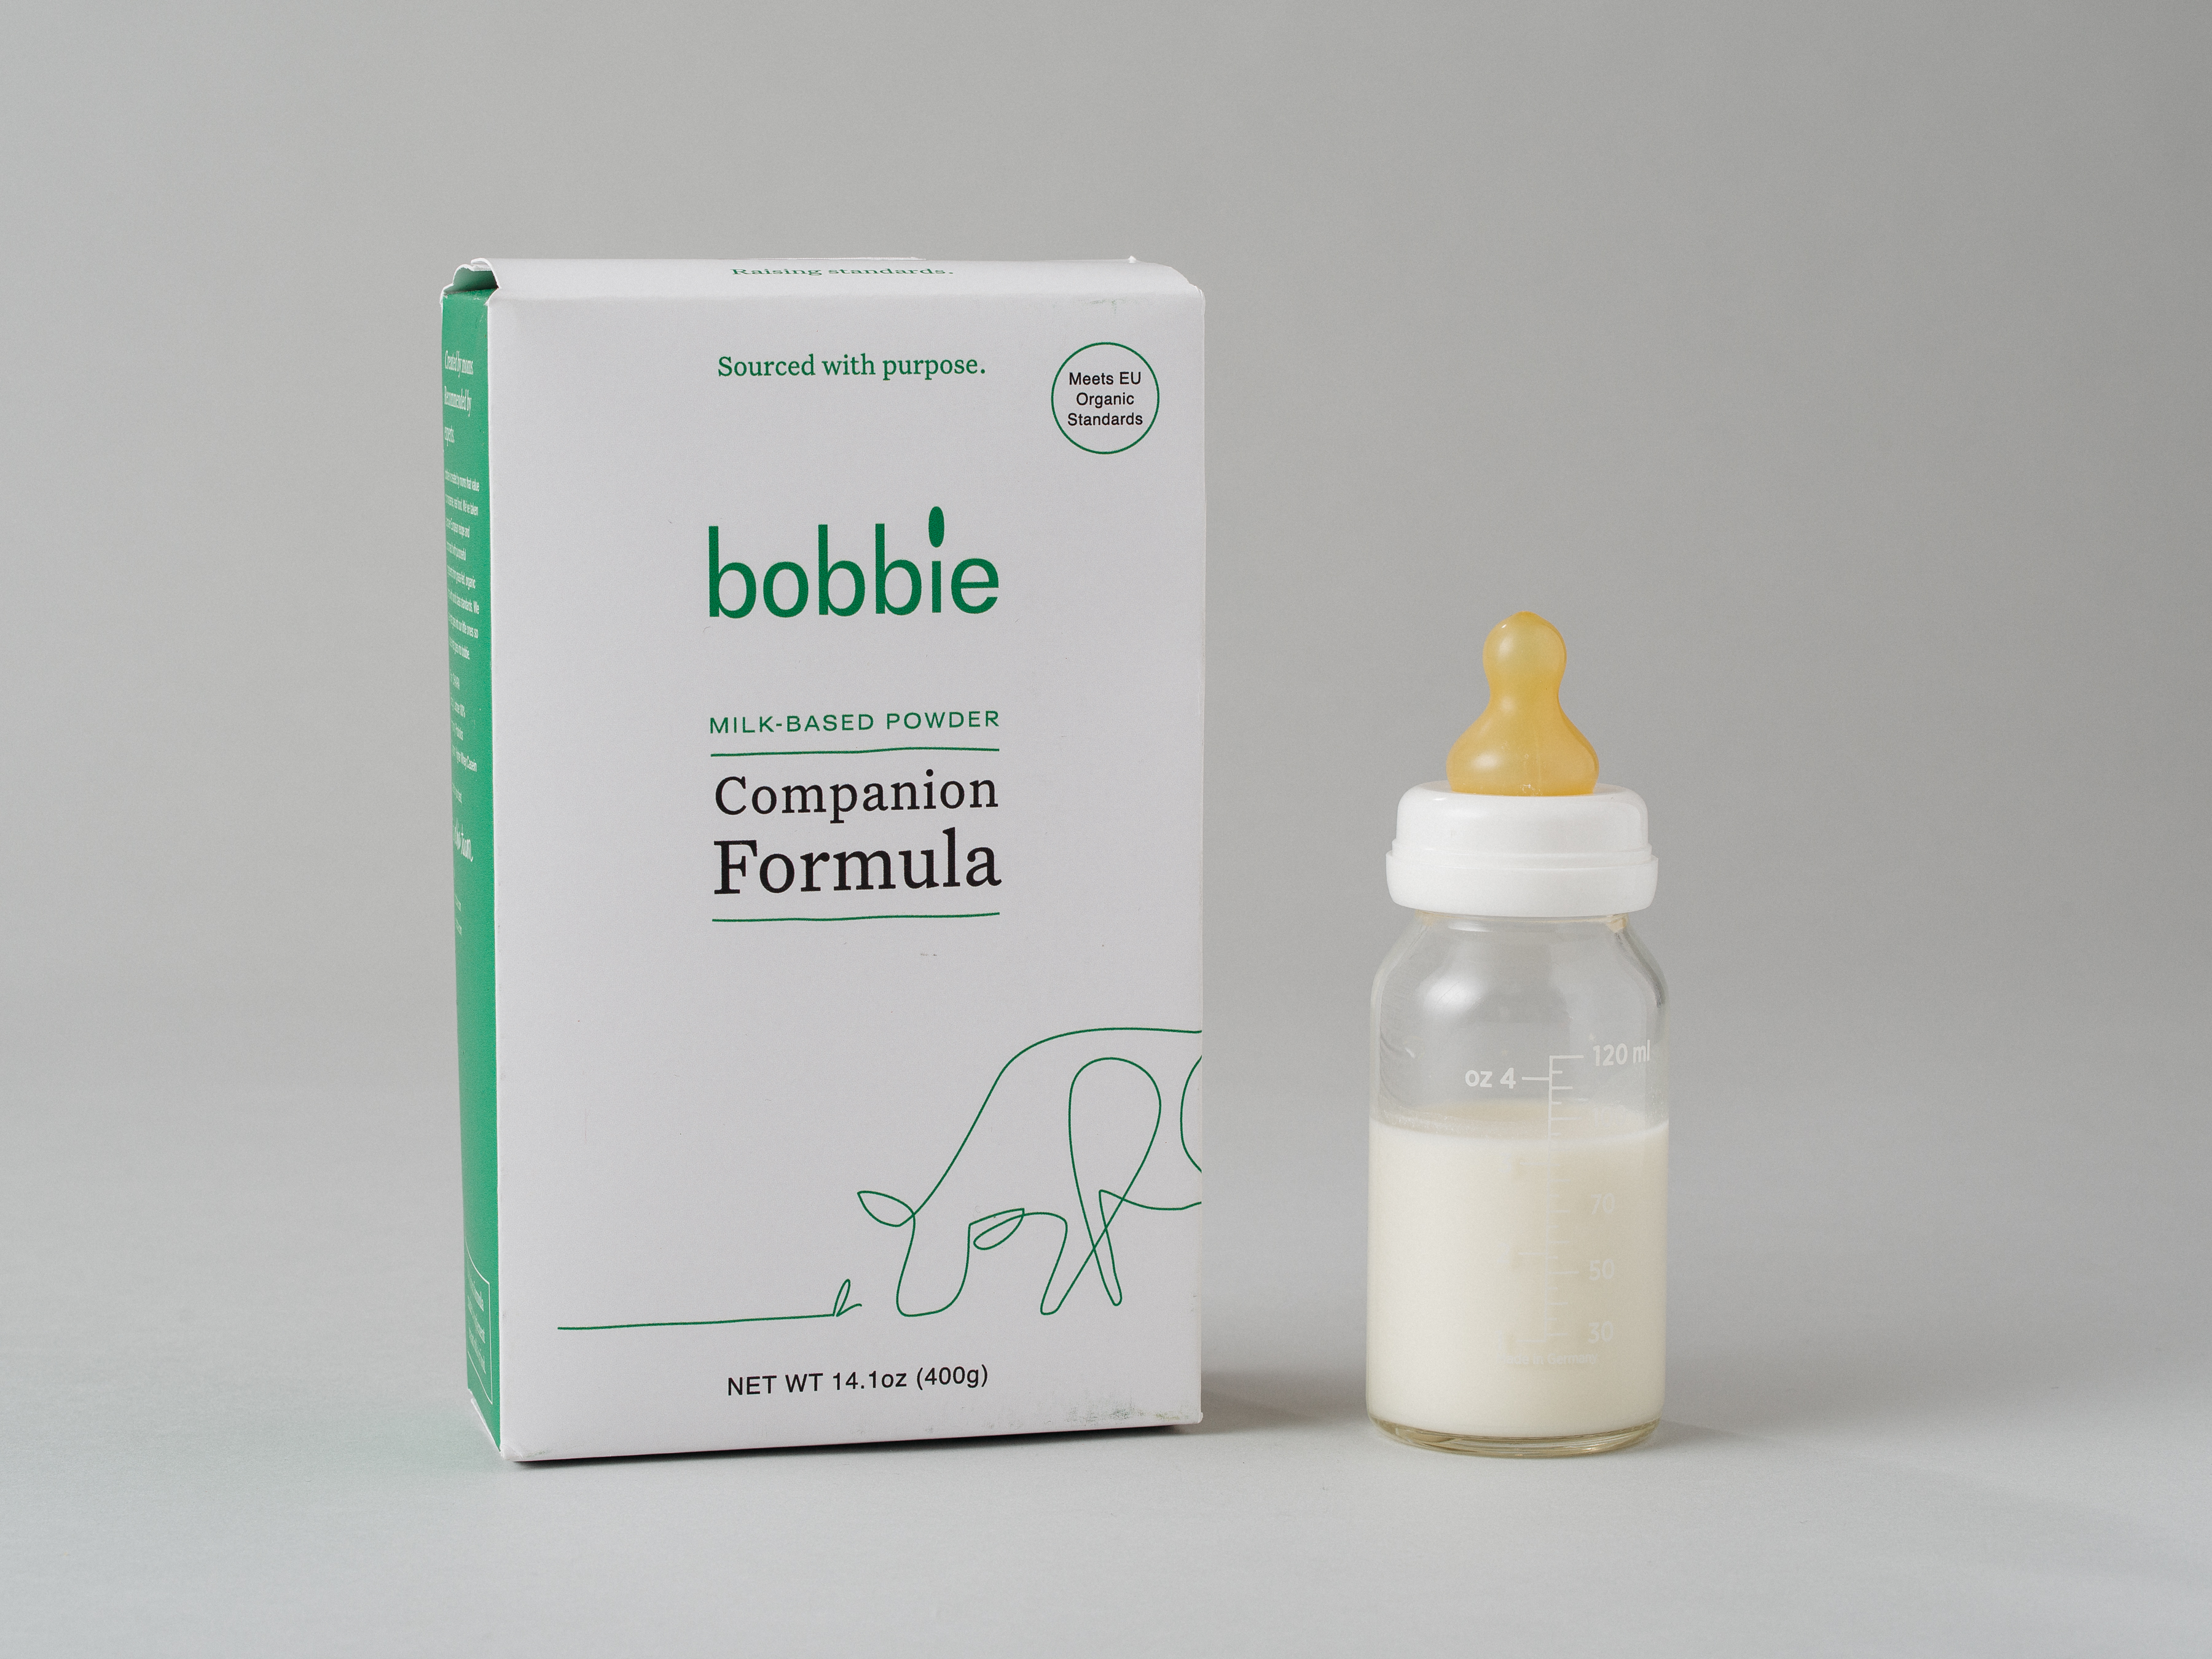 organic liquid baby formula